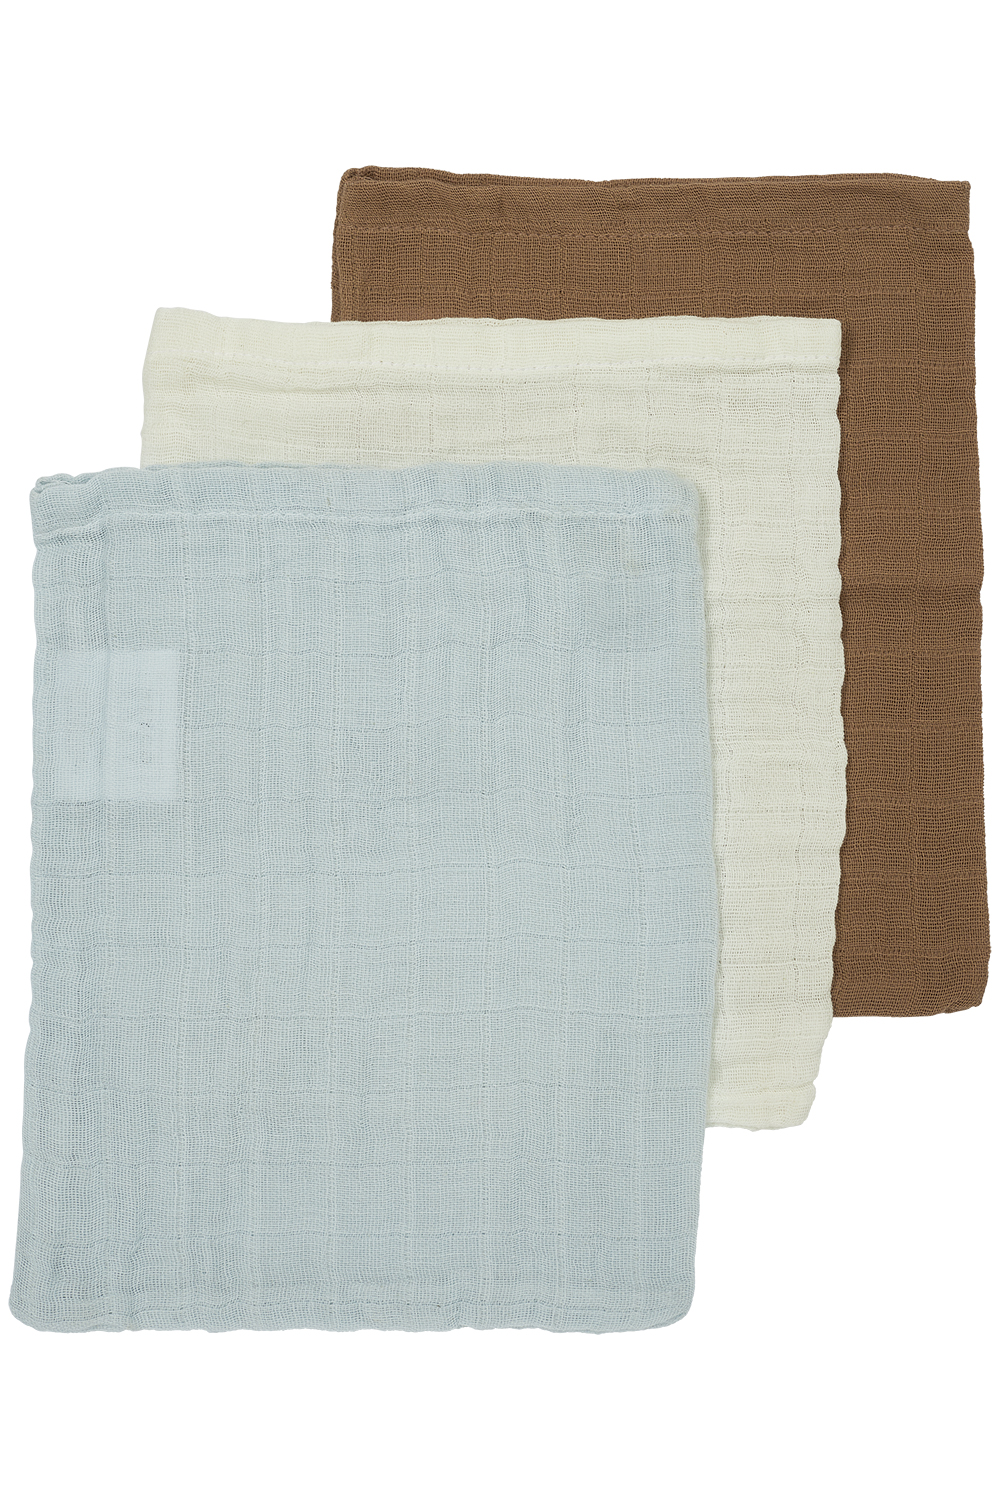 Washcloth 3-pack muslin Uni - offwhite/light blue/toffee - 20x17cm